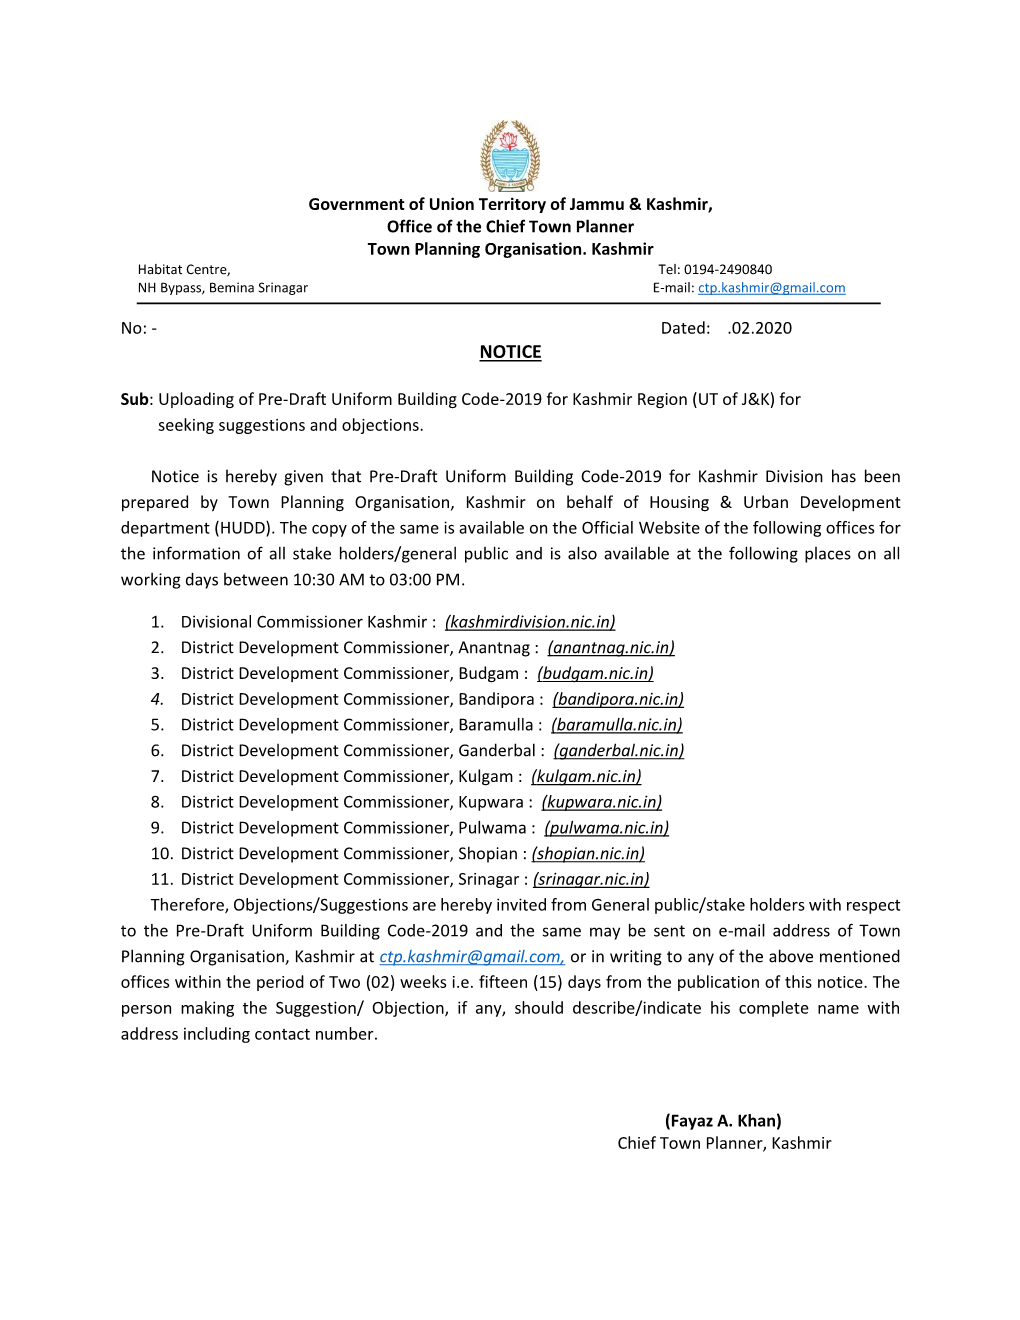 Pre-Draft Uniform Building Code-2019 for Kashmir Region For